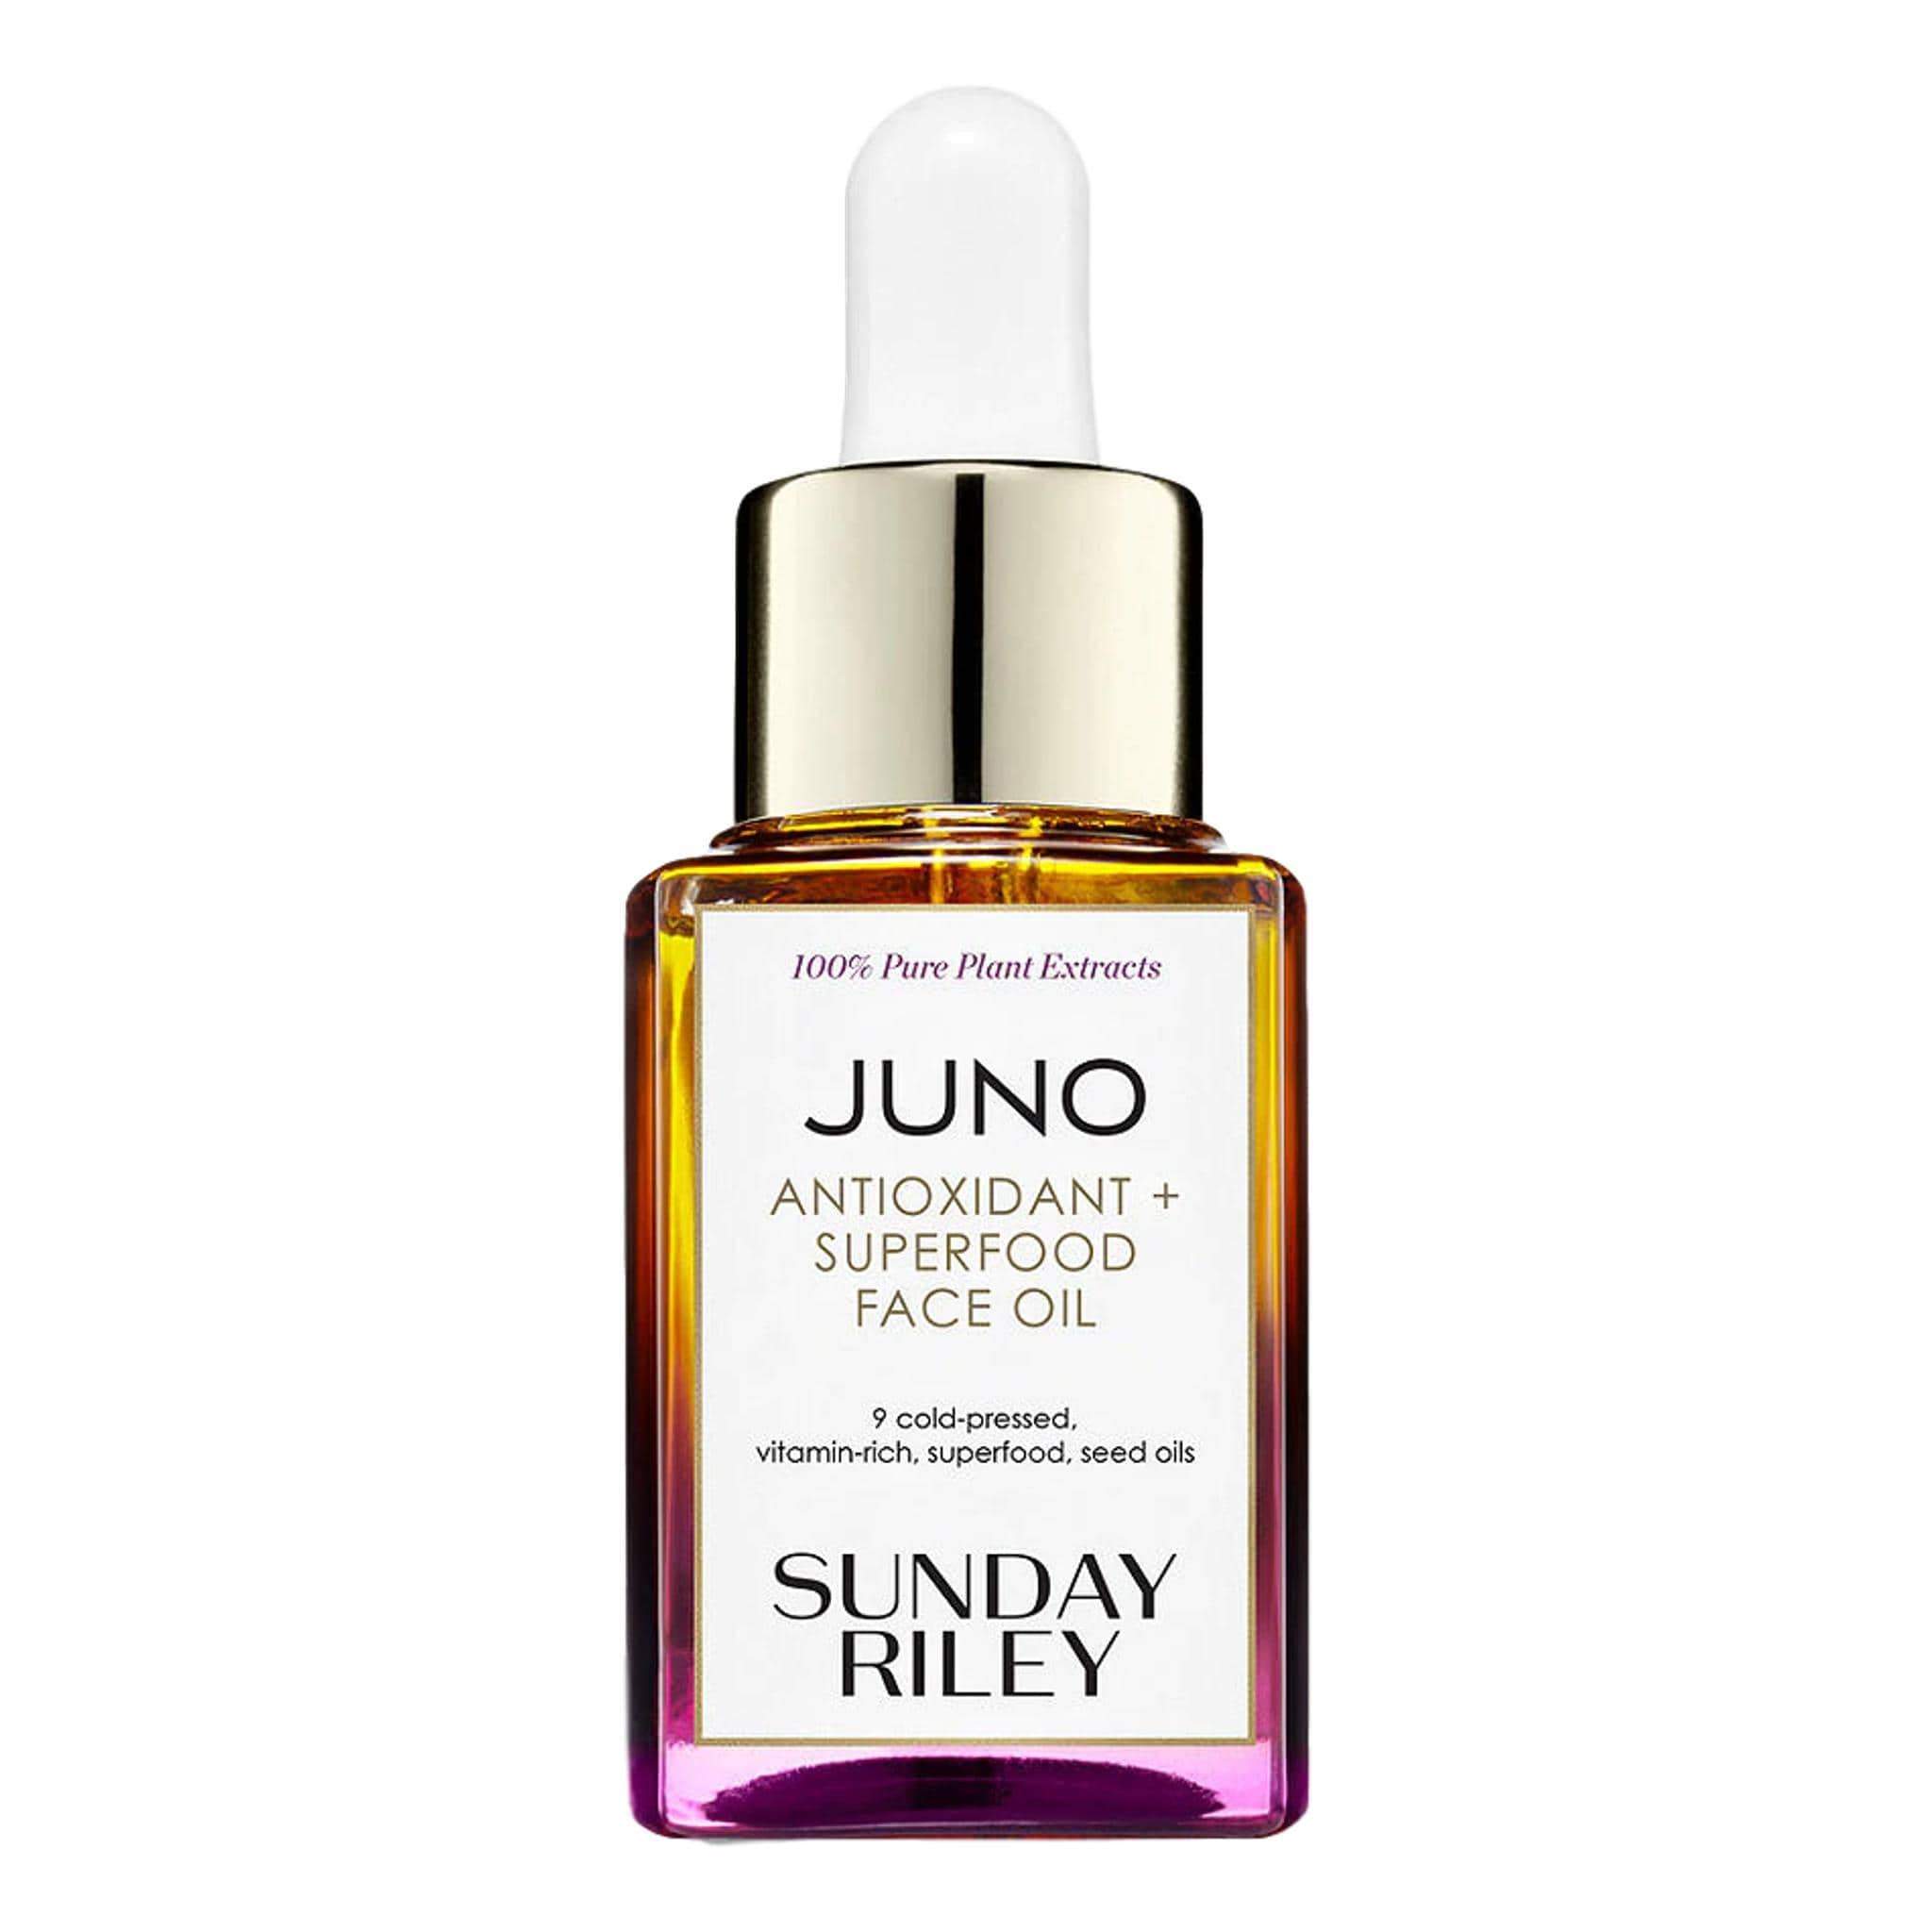 Sunday Riley Juno Antioxidant + Superfood Face Oil, 15ml, face oil, London Loves Beauty